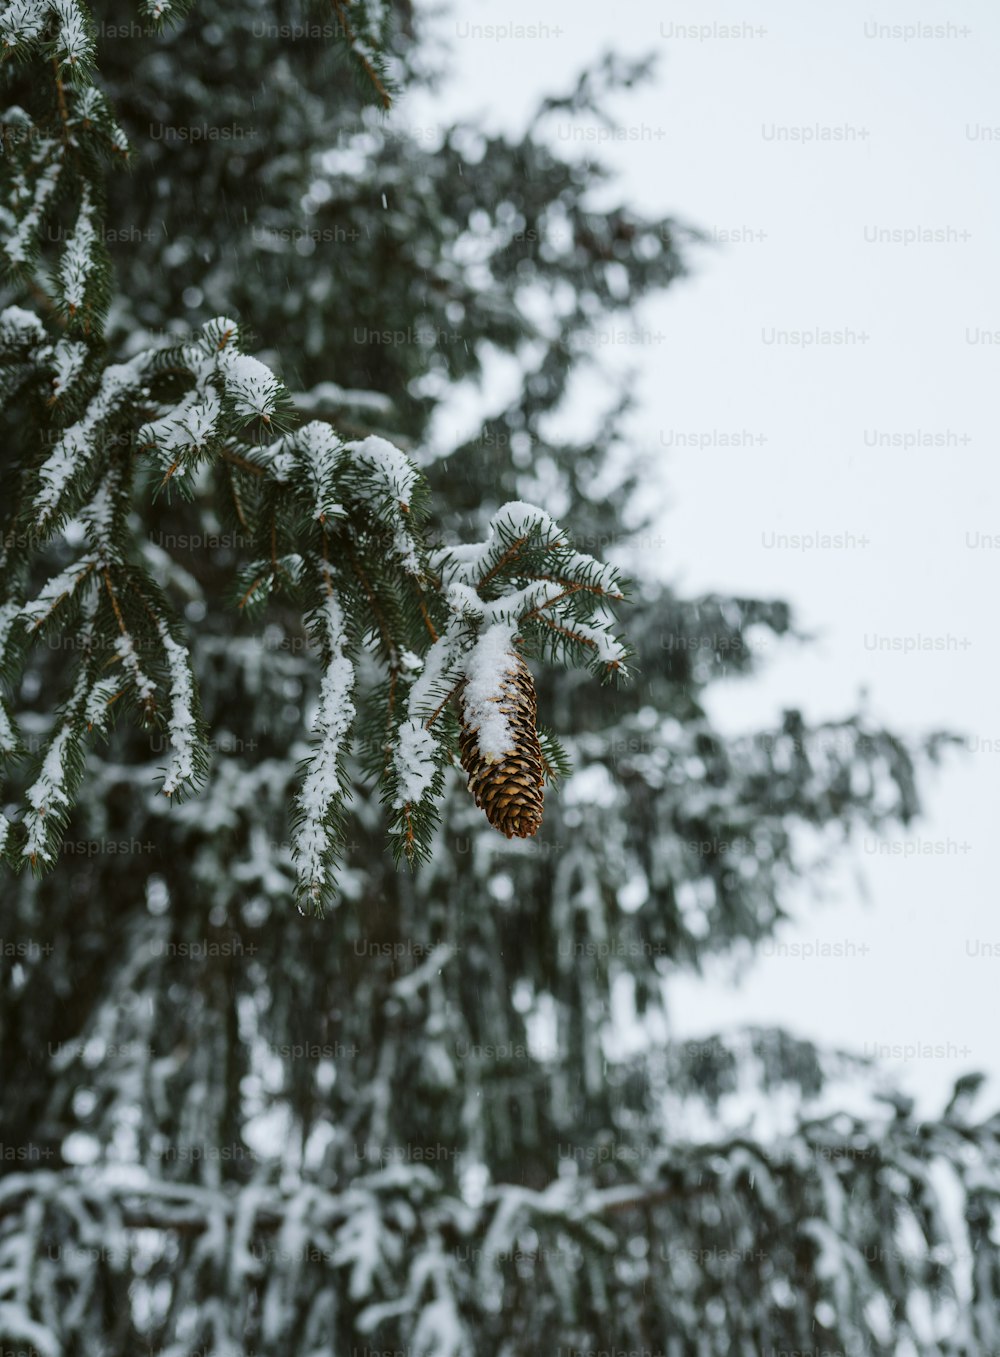 una pigna appesa a un albero coperto di neve